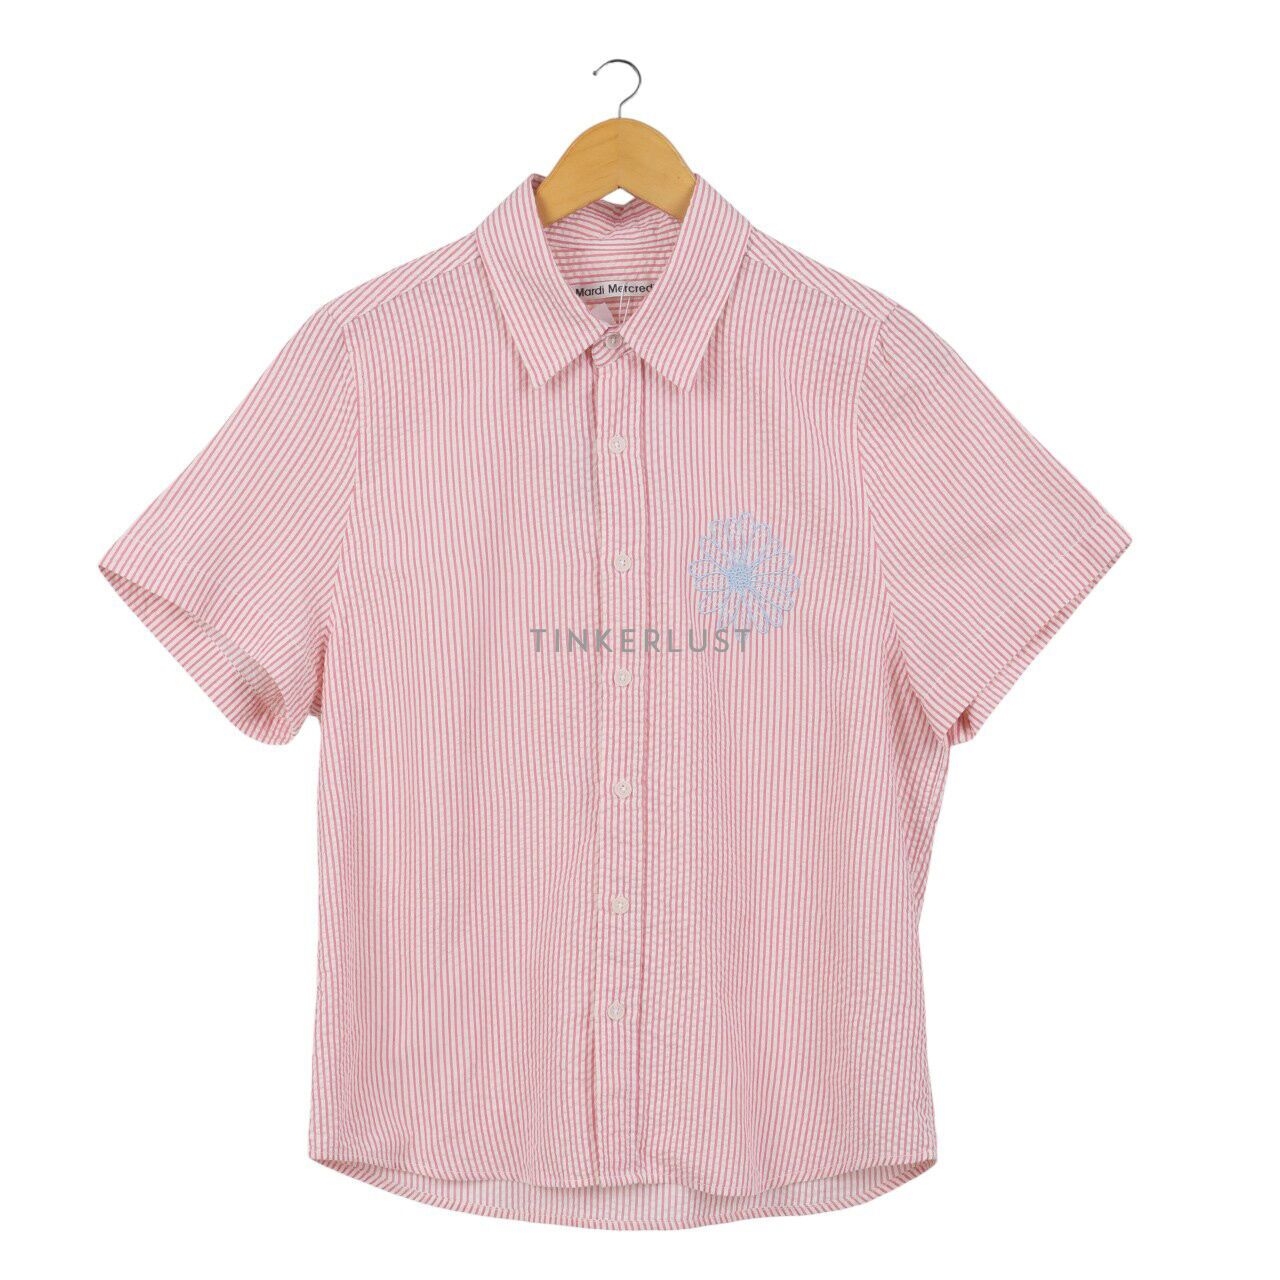 Mardi Mercredi Pink & Broken White Stripes Shirt